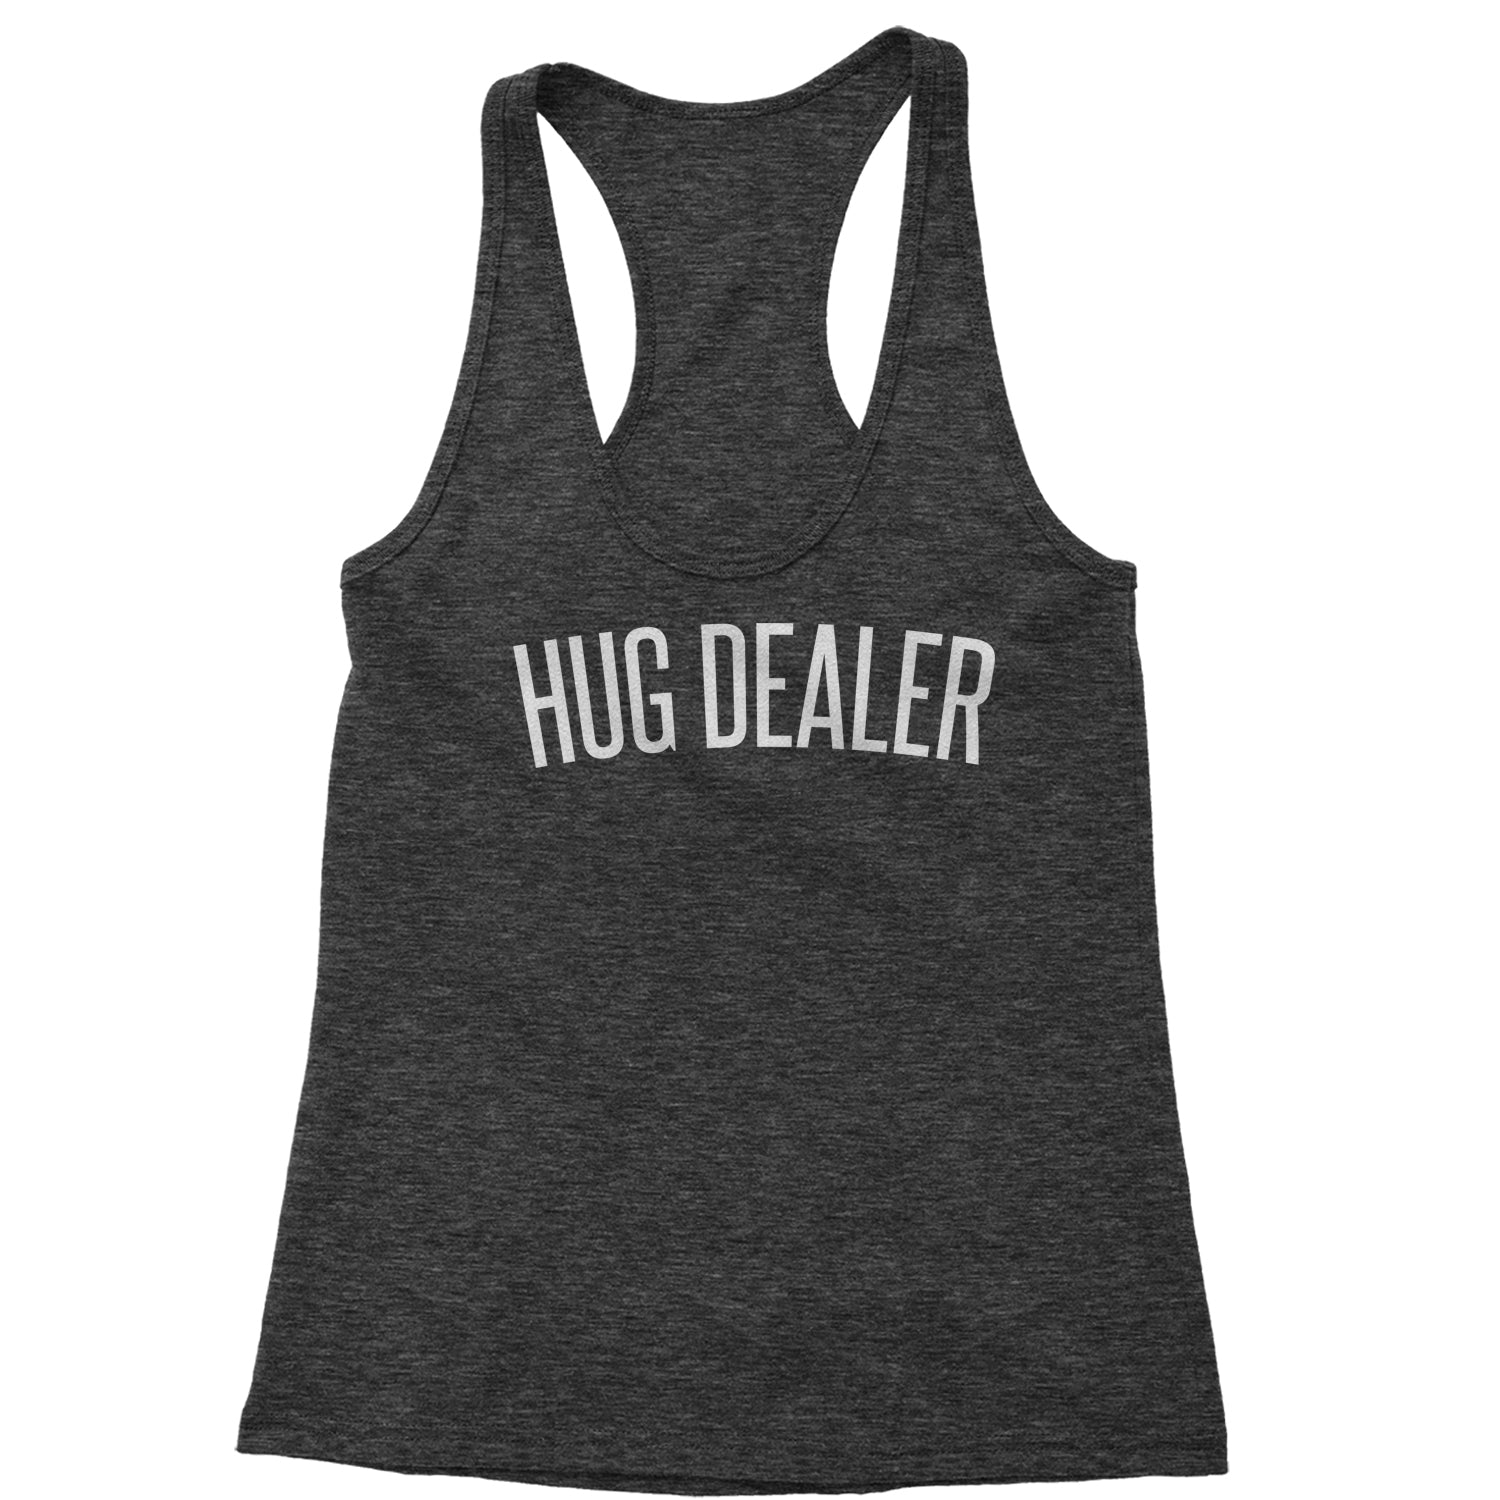 Hug Dealer Racerback Tank Top for Women dealing, free, hug, hugger, hugs by Expression Tees